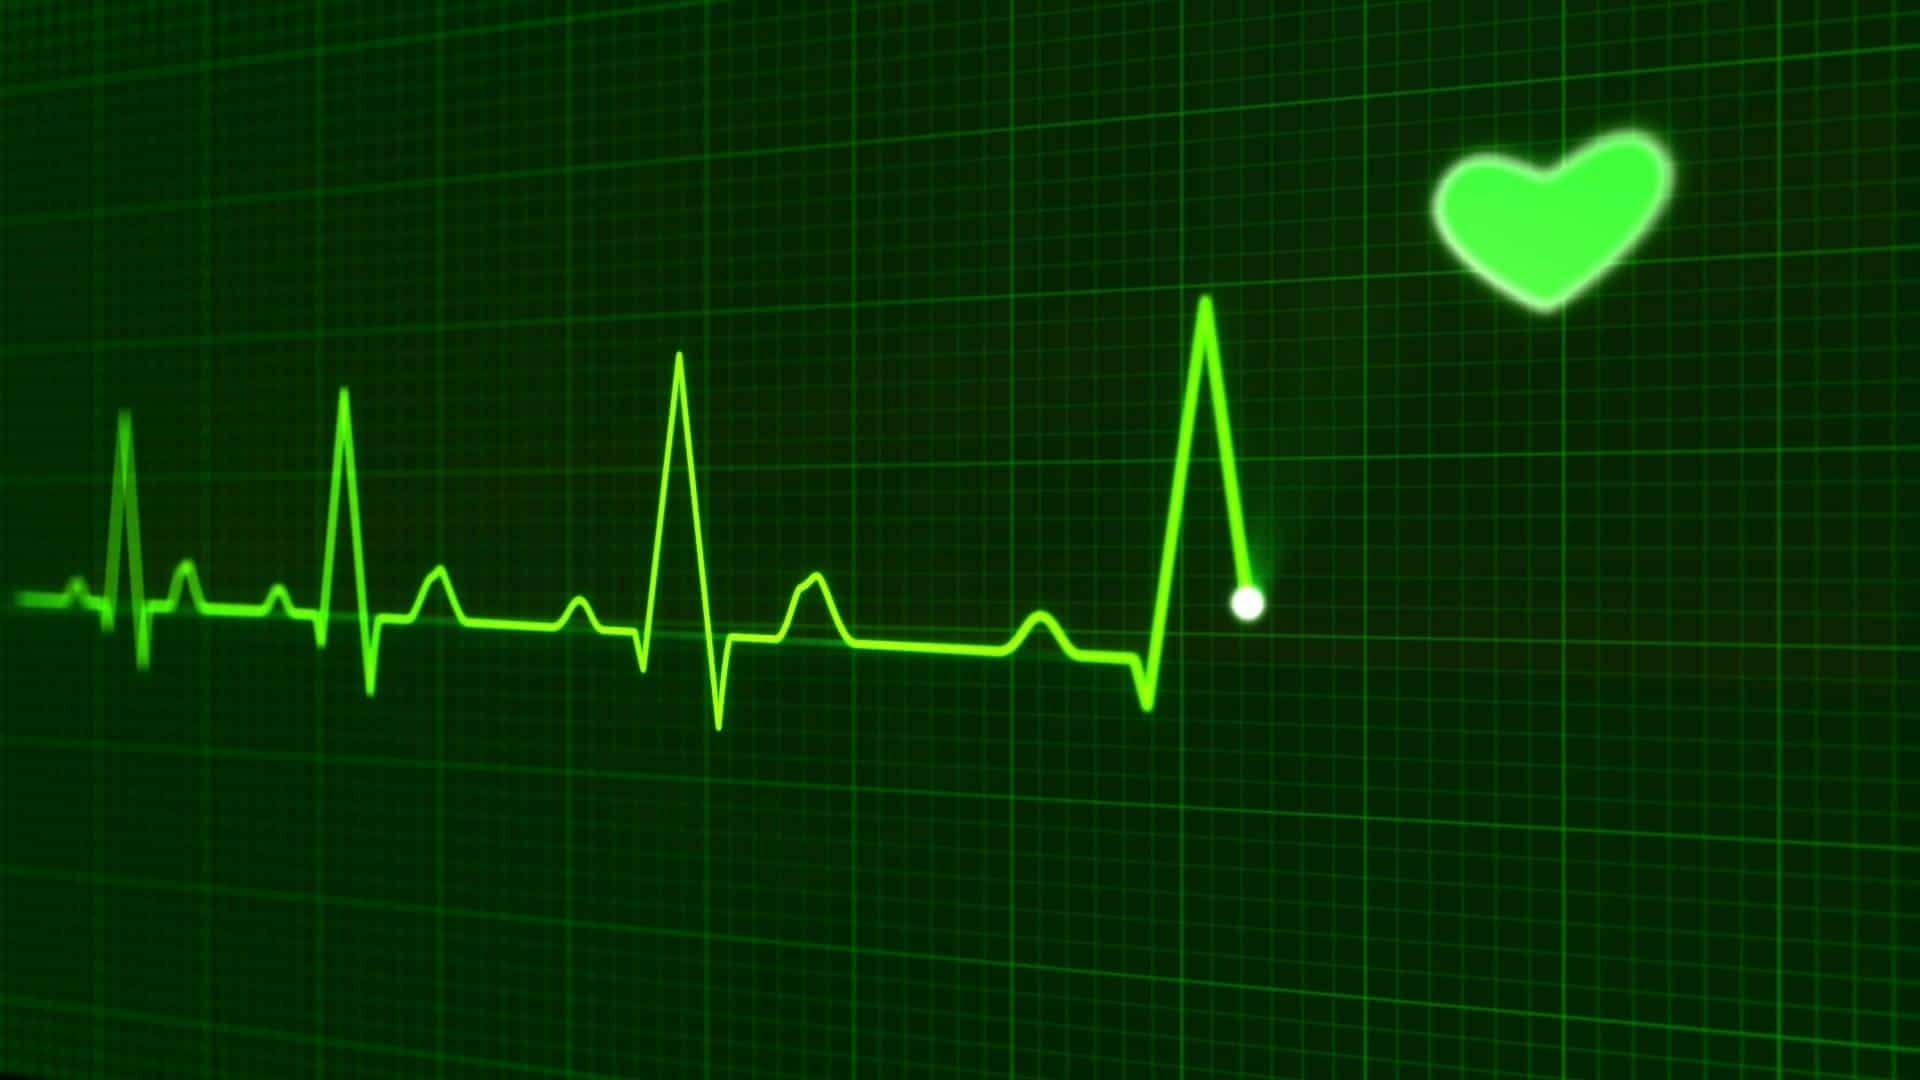 EEG Chart With Heart